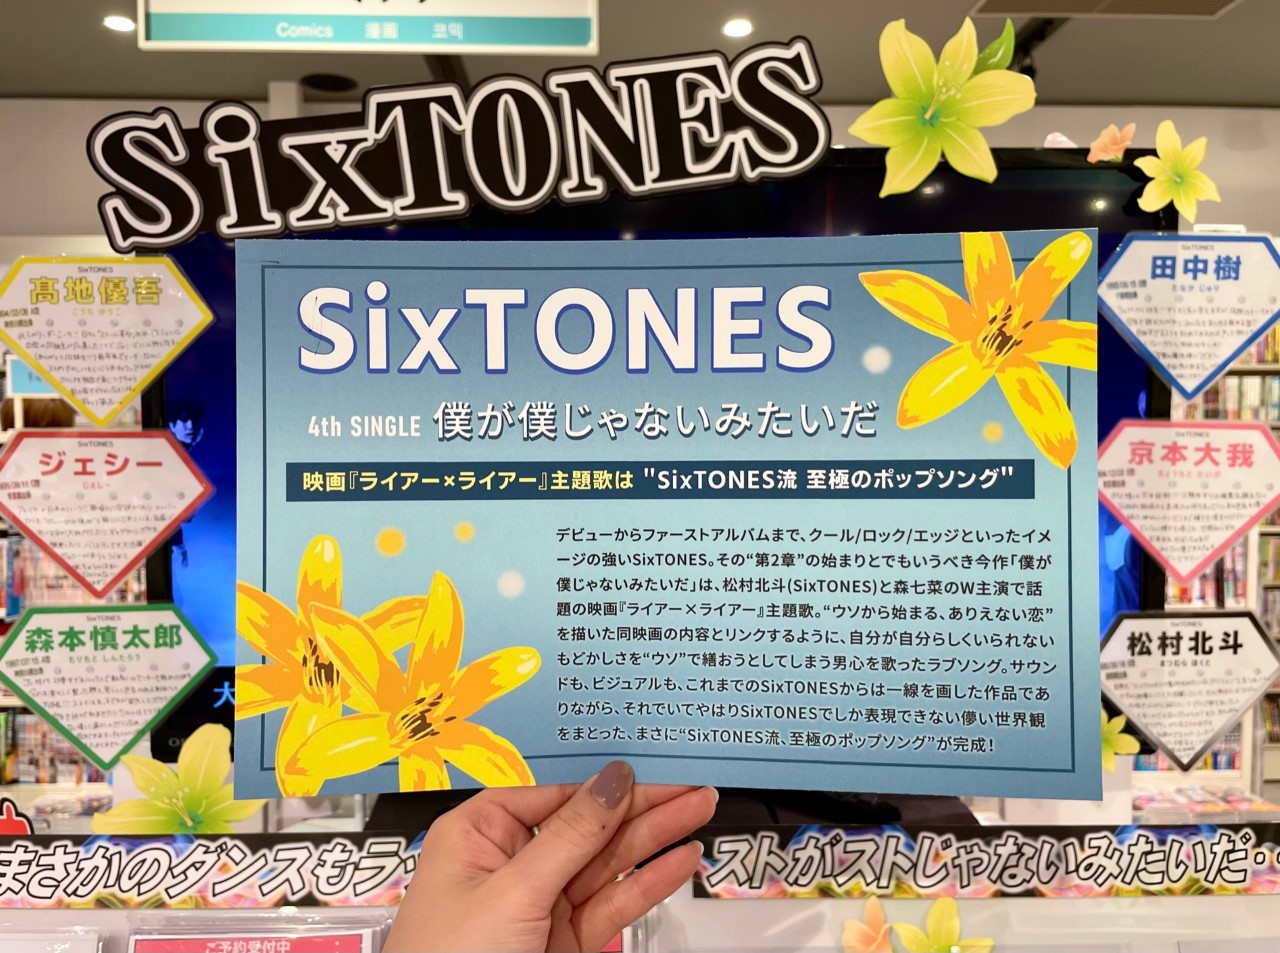 Twitter 上的 Hmv Books Hakata Sixtones 僕が僕じゃないみたいだ フラゲ日 松村北斗 Amp 森七菜 W主演映画 ライアー ライアー 主題歌 ワイルドなイメージのストが 今作ではダンスもラップもなし Sixtones流 至極のポップソング になりました